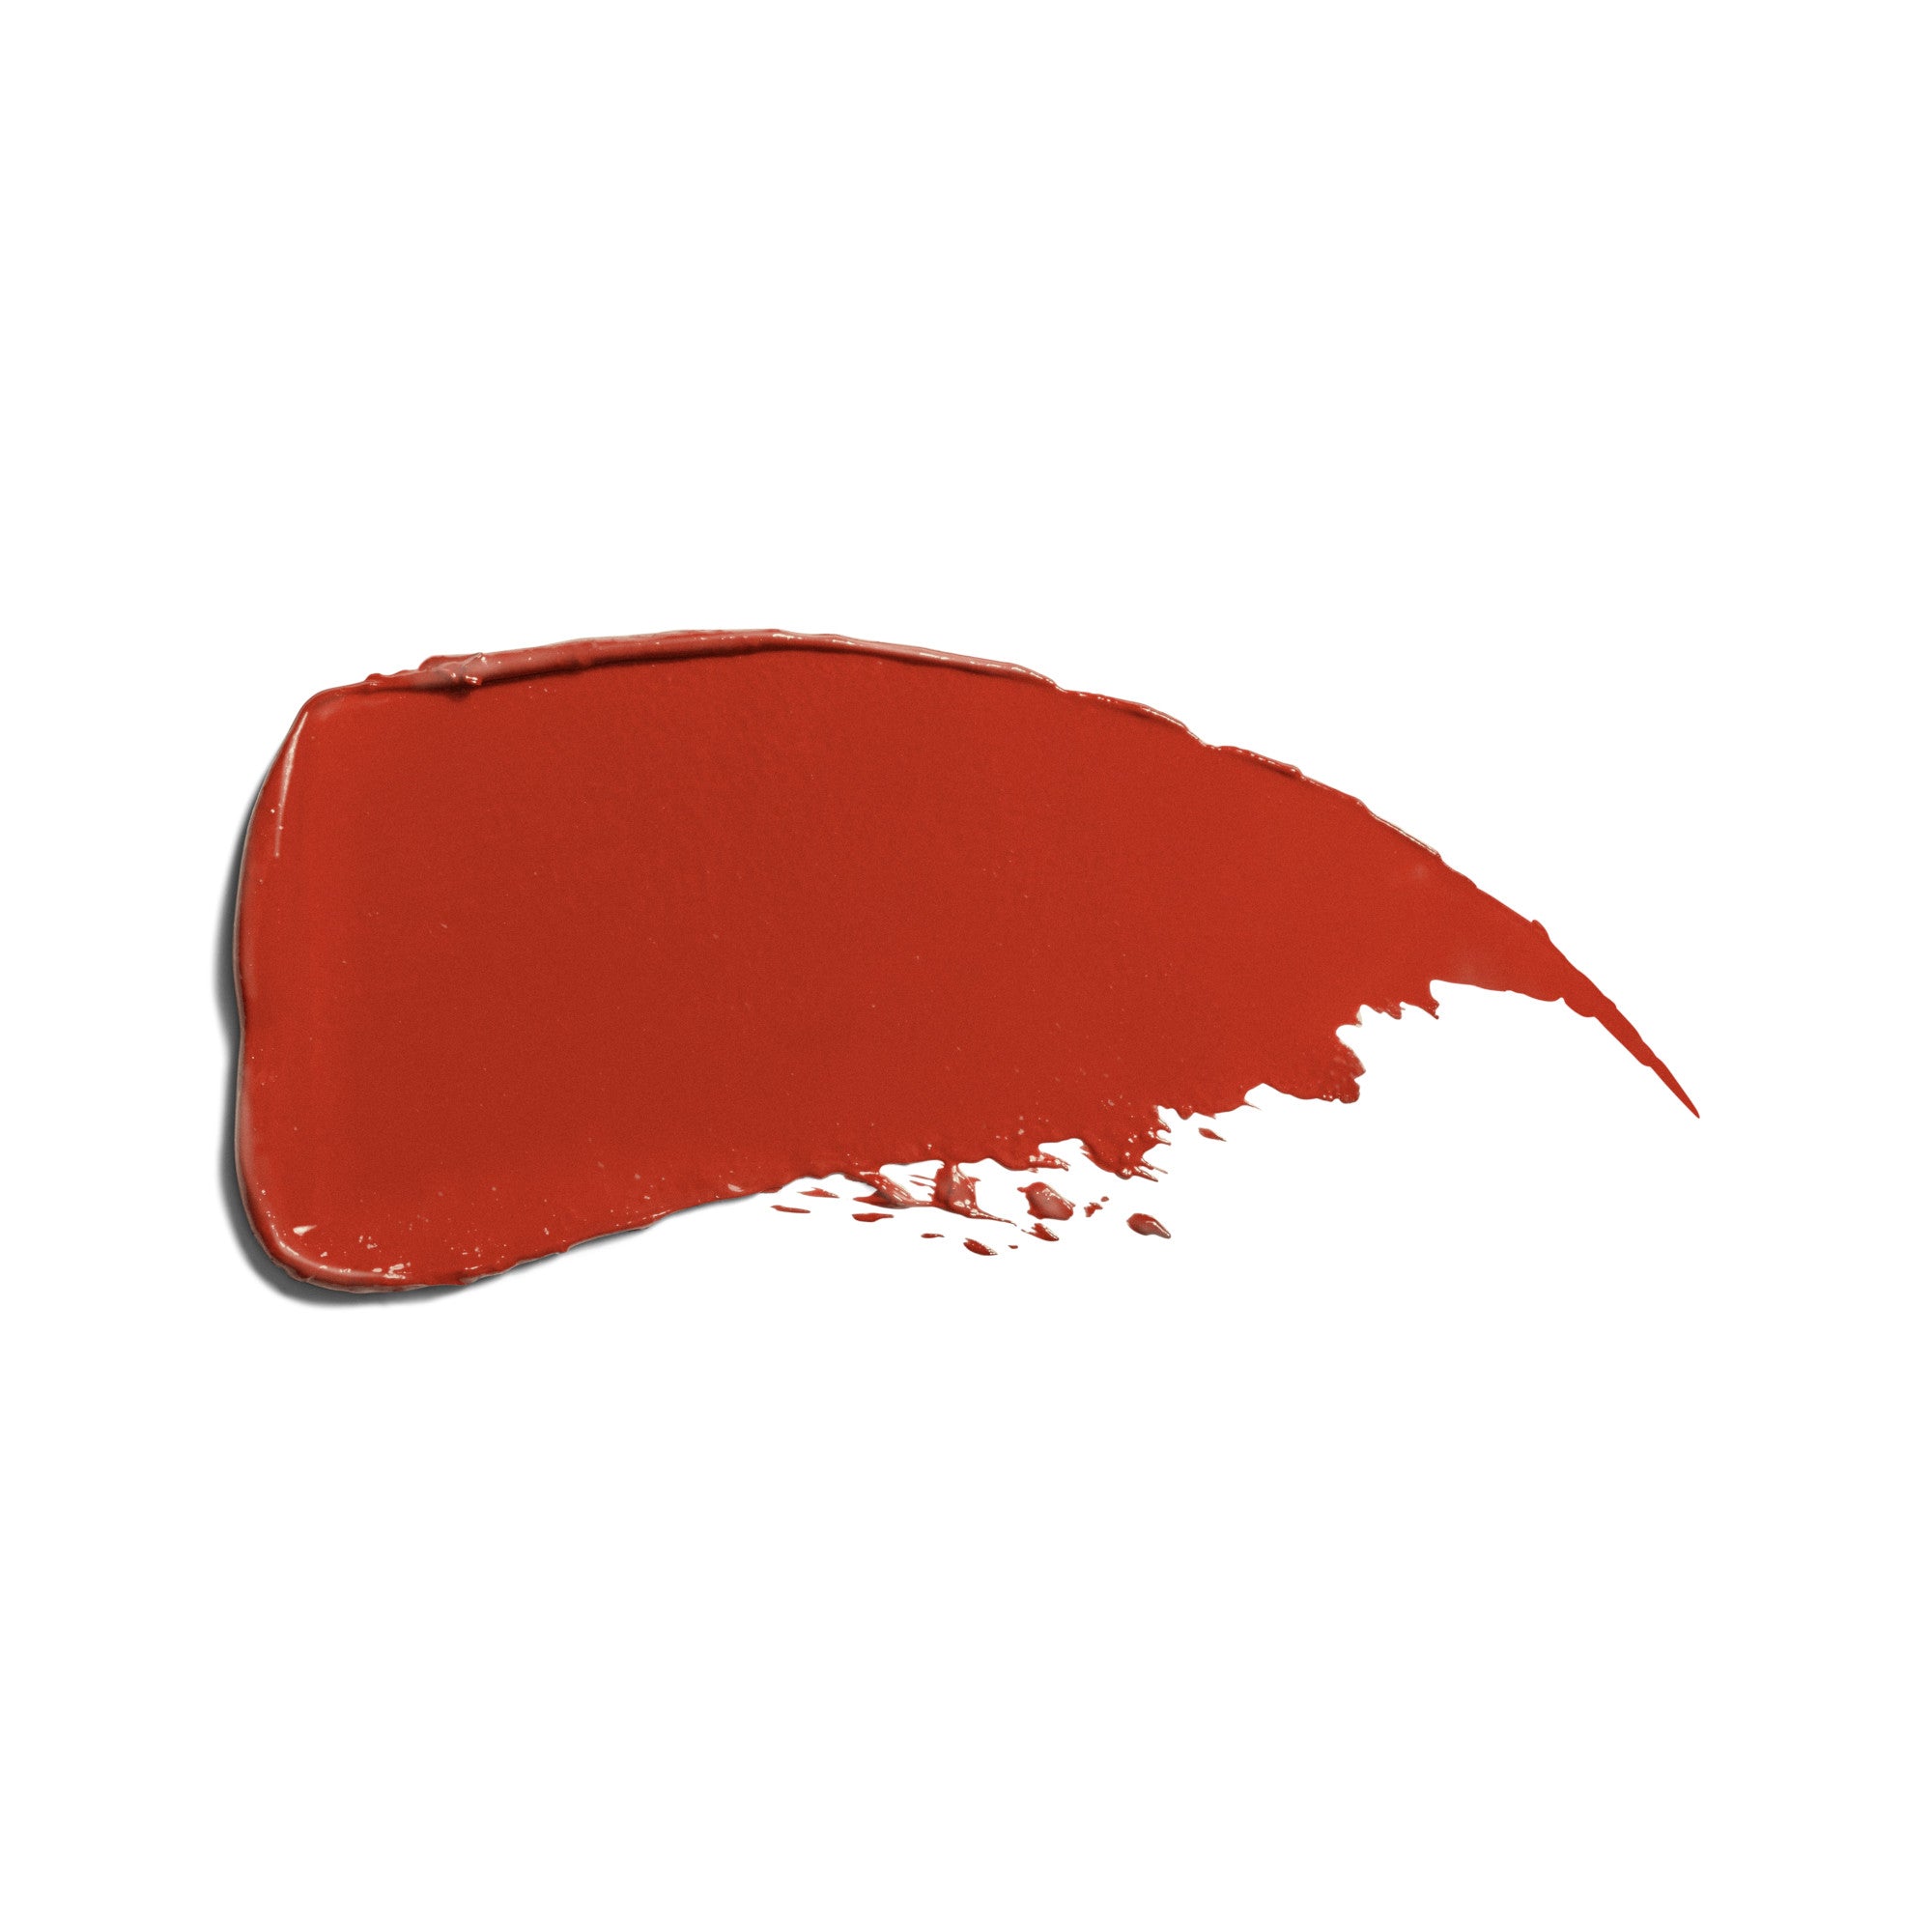 Shiseido TechnoSatin Long Lasting & Hydrating Gel Lipstick upload